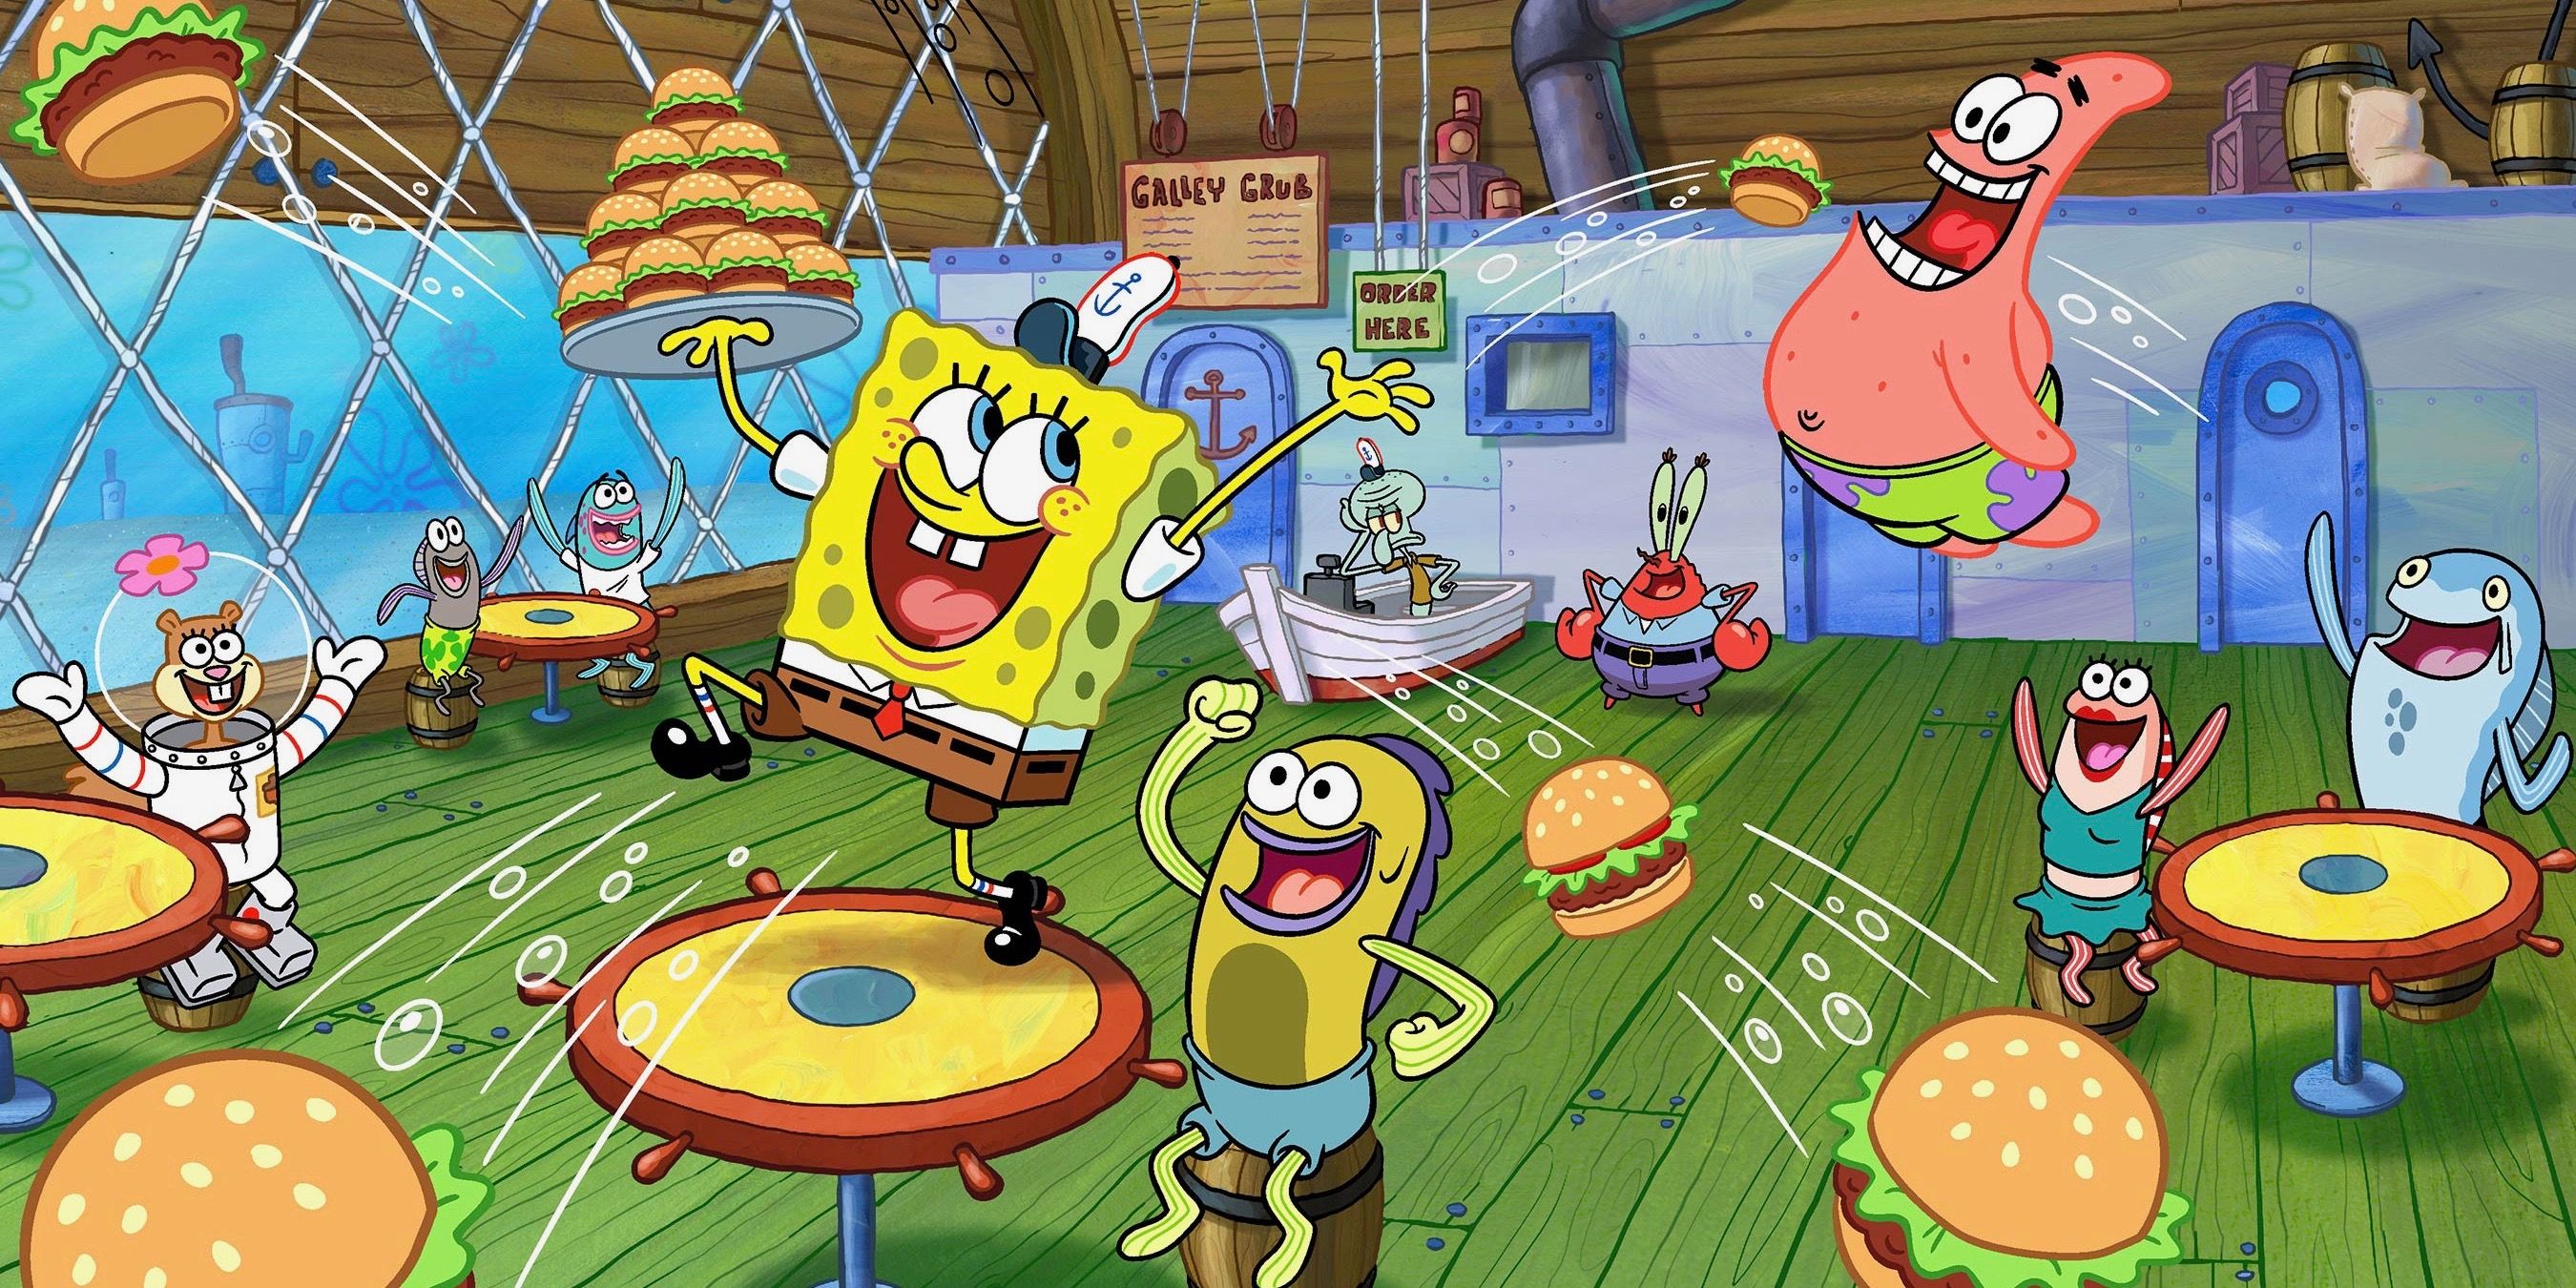 Nickelodeon Is Developing “Spongebob Squarepants” Spin-Offs